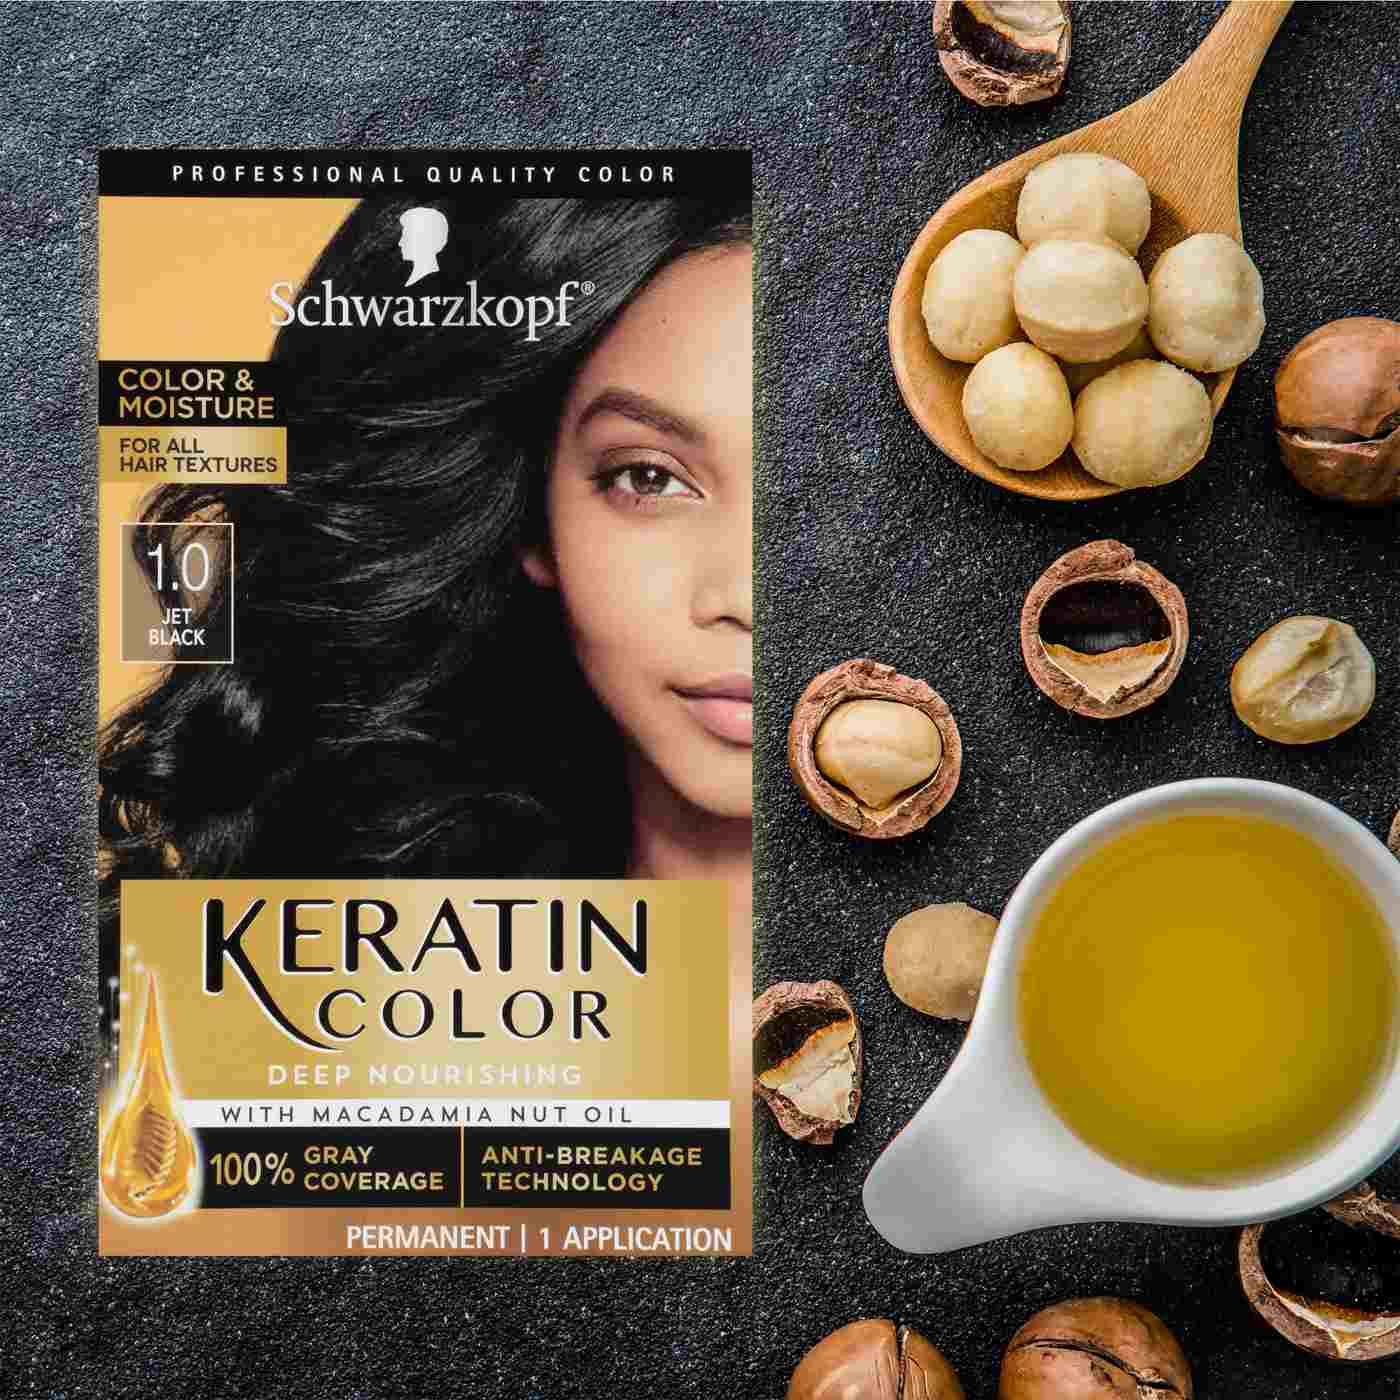 Schwarzkopf Keratin Color, Color & Moisture Permanent Hair Color Cream, 1.0 Jet Black; image 6 of 6